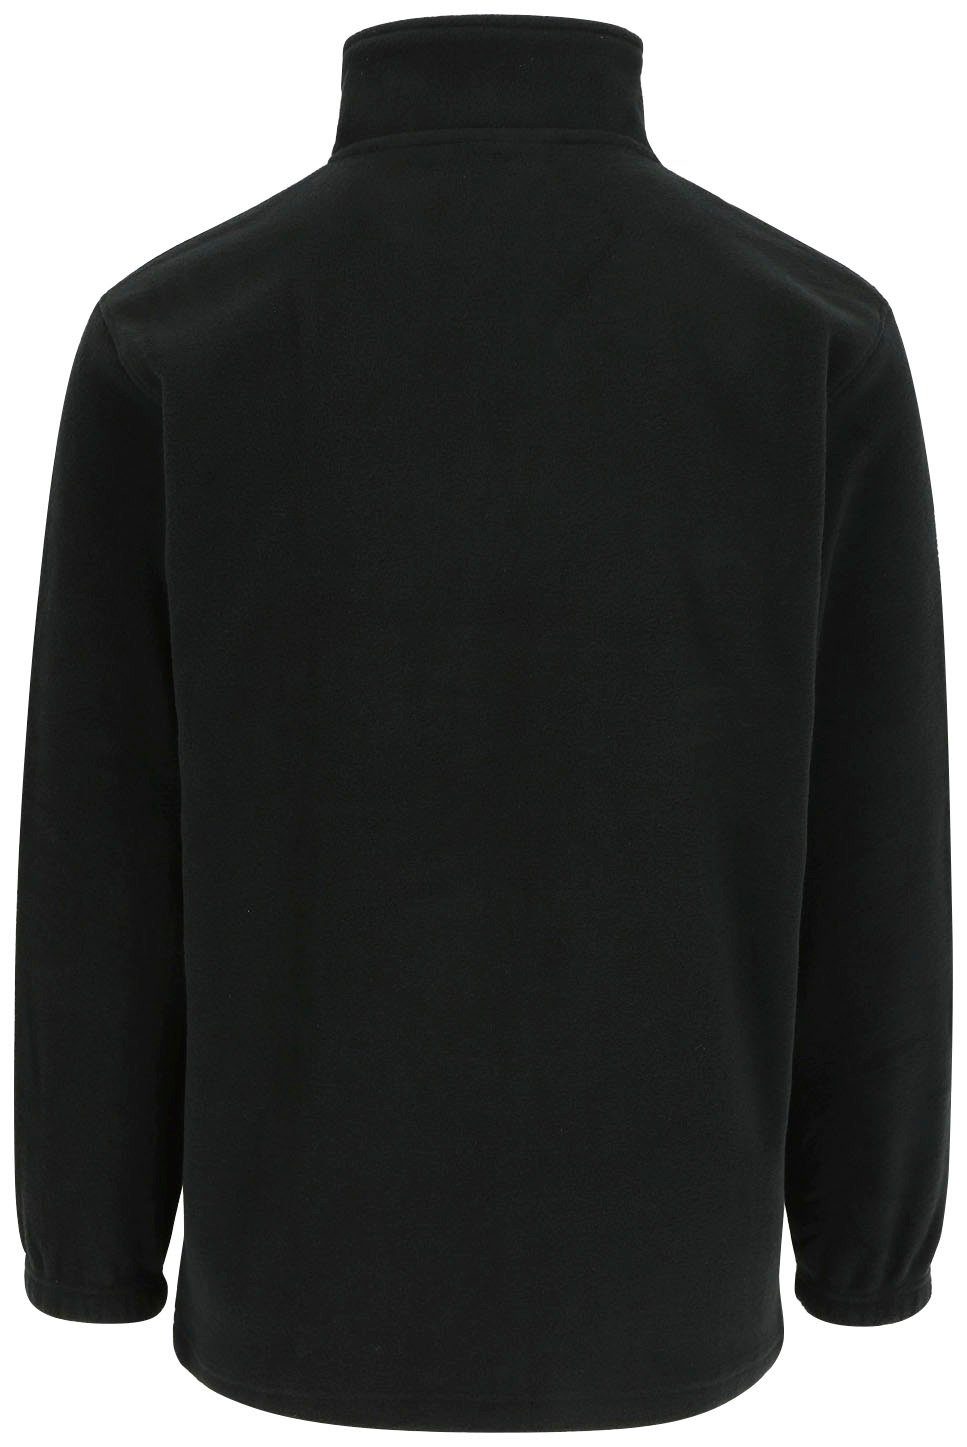 Strickfleece-Pullover angenehmes Antalis Sweater Kurzer verschiedene Fleece Herock Tragegefühl, Reißverschluss, Farben